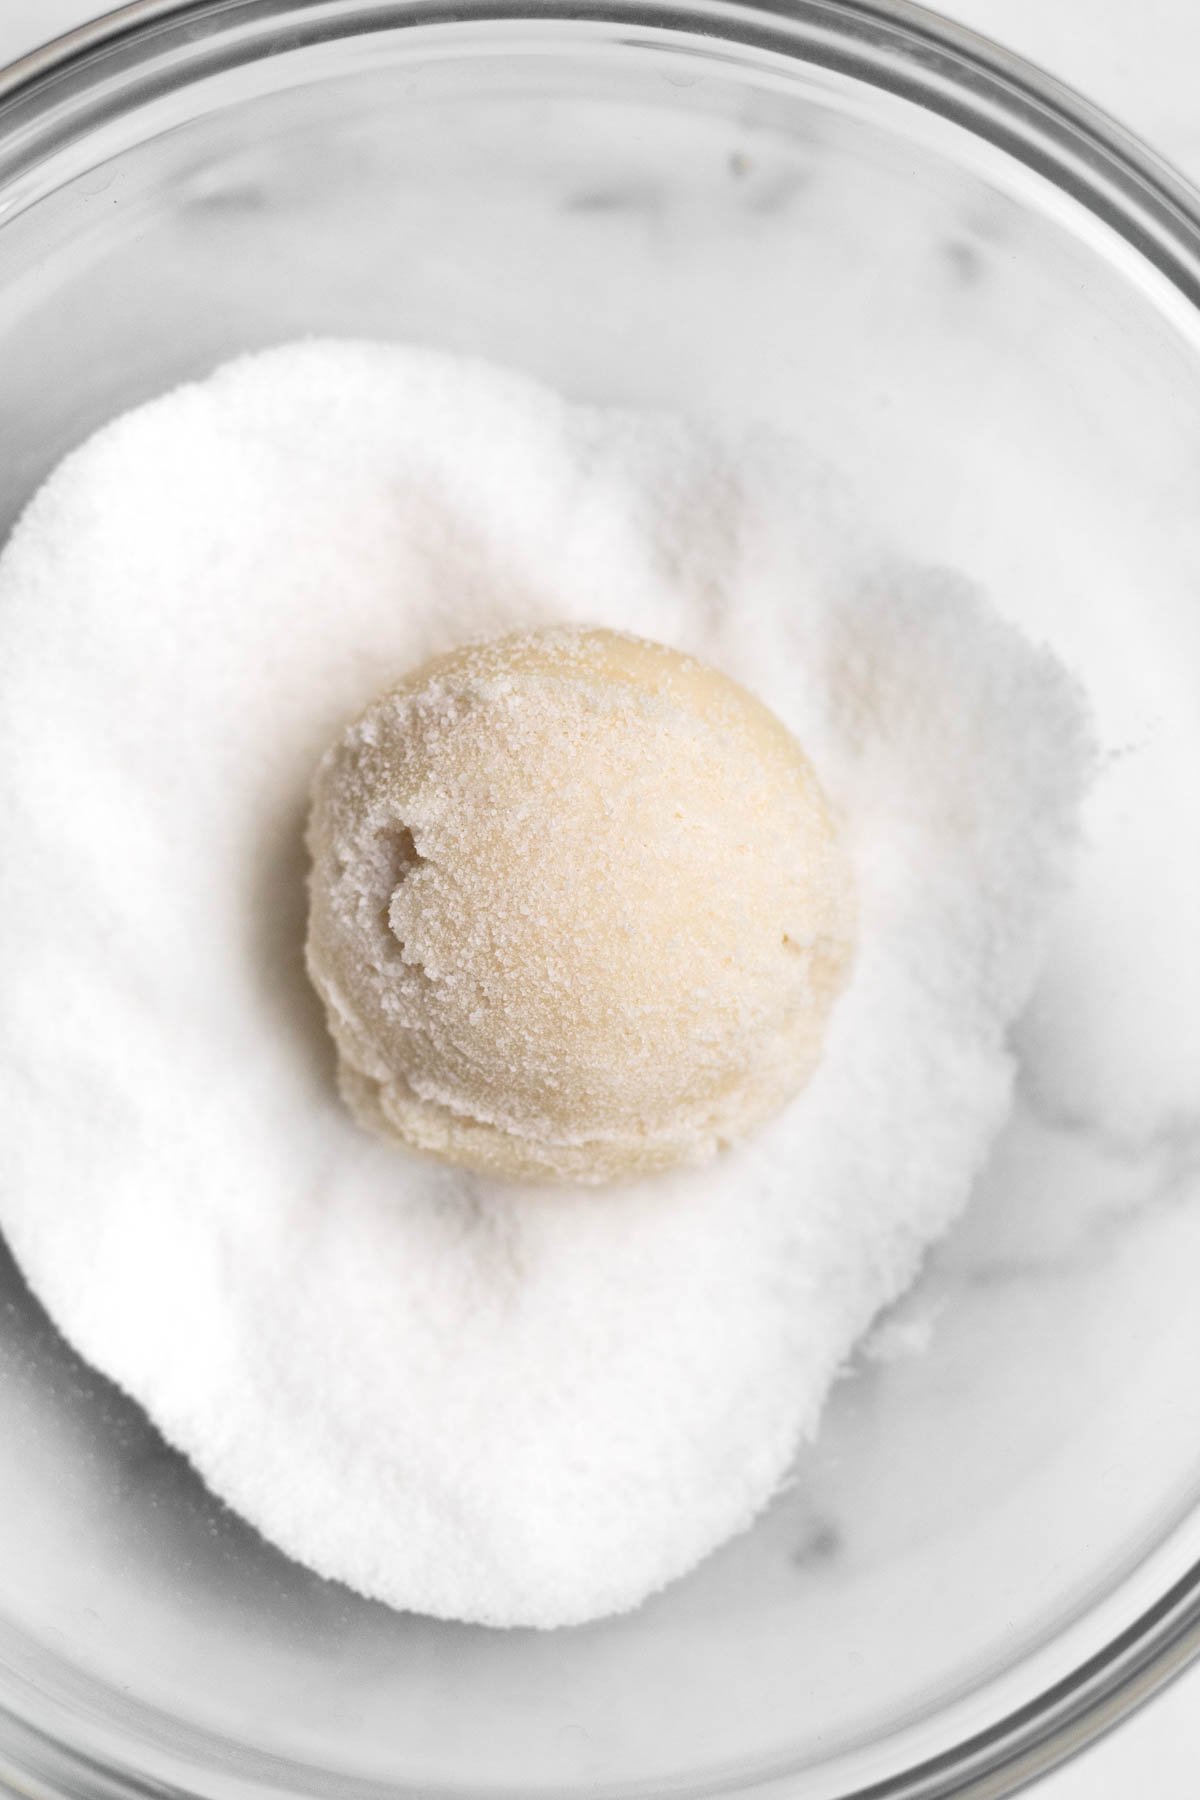 Dough balls in a bowl of granulated sugar.